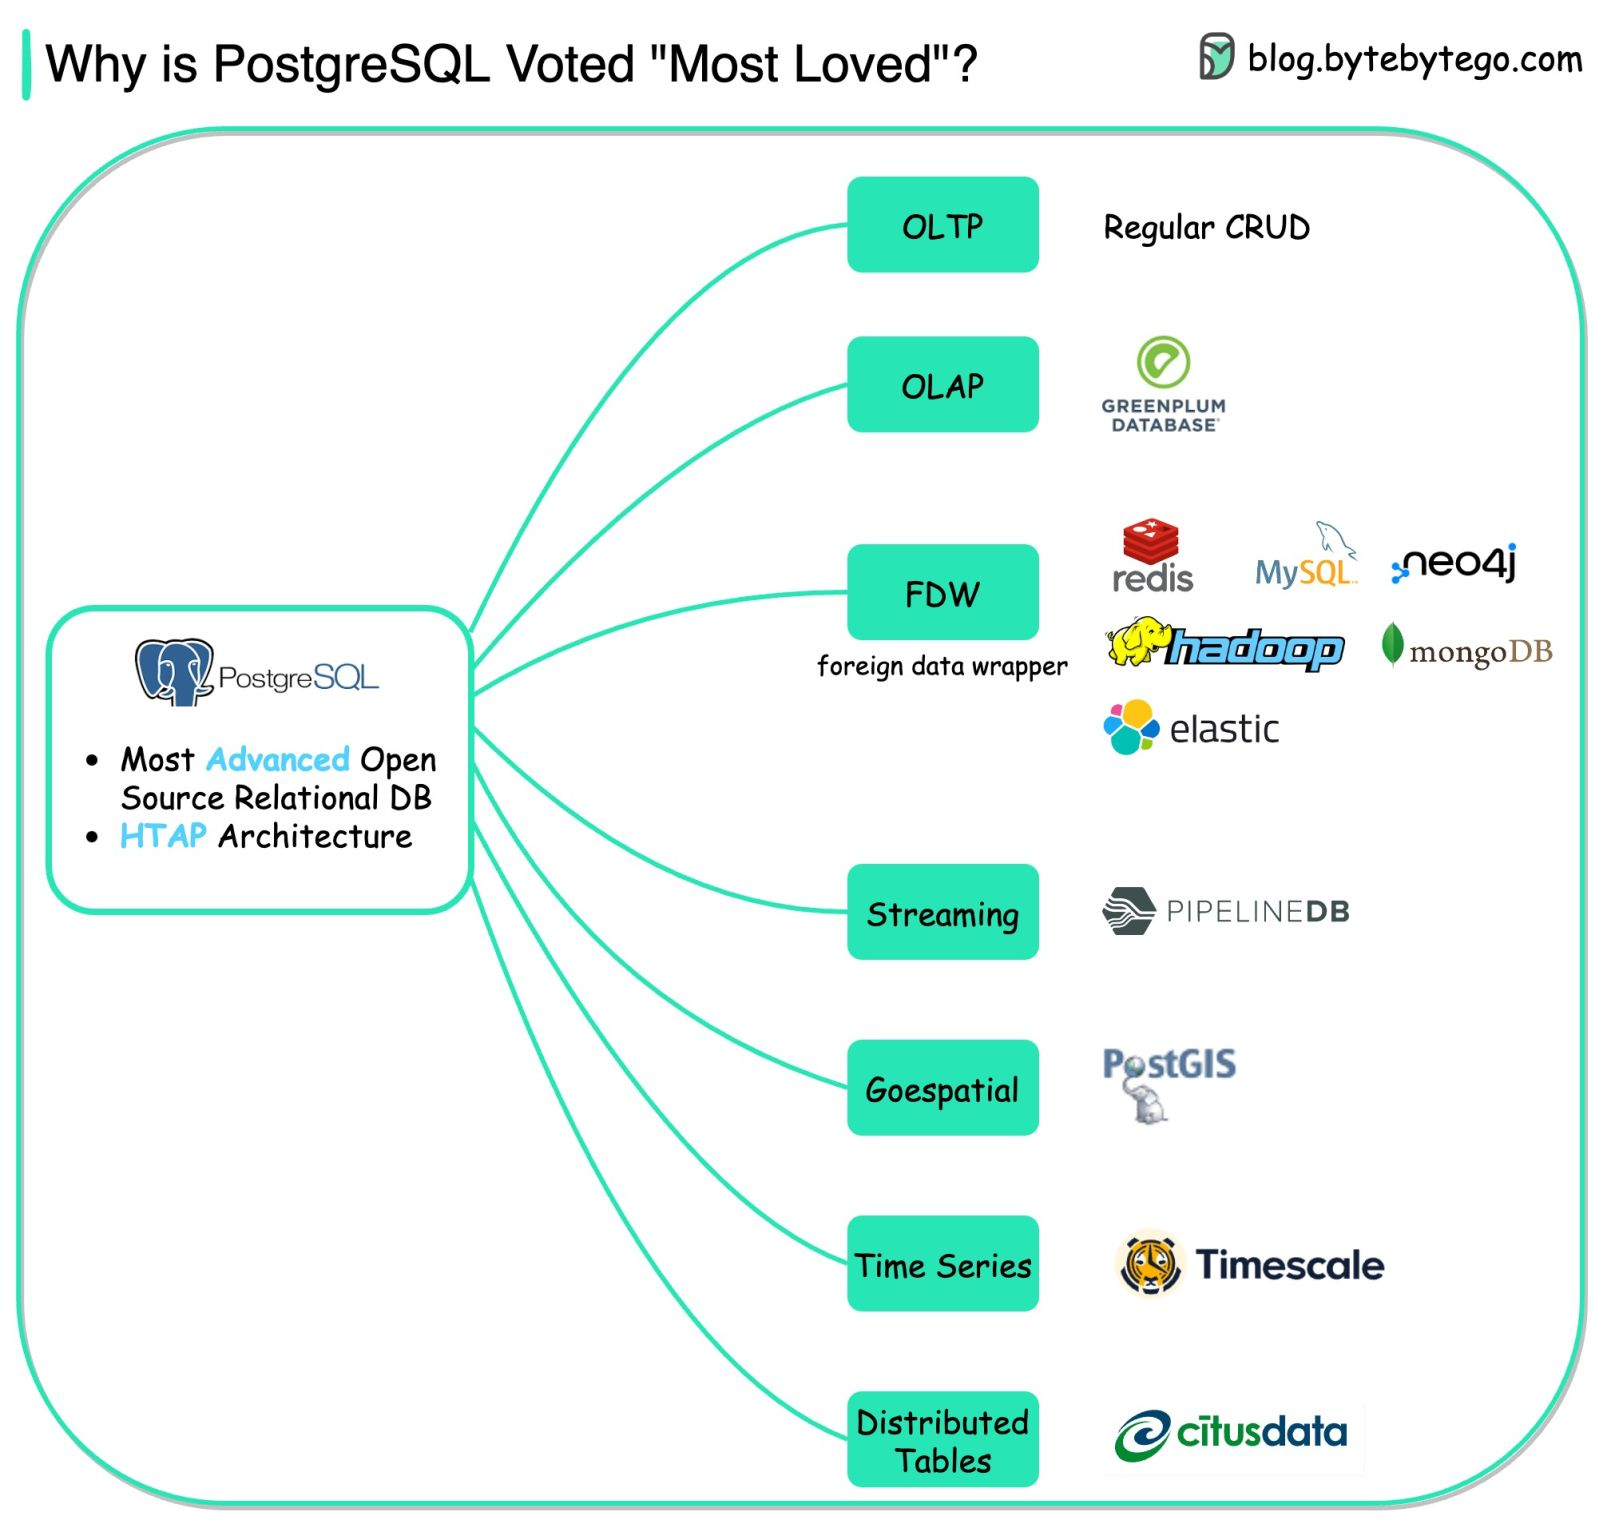 Why is PostgreSQL votes "Most Loved"?